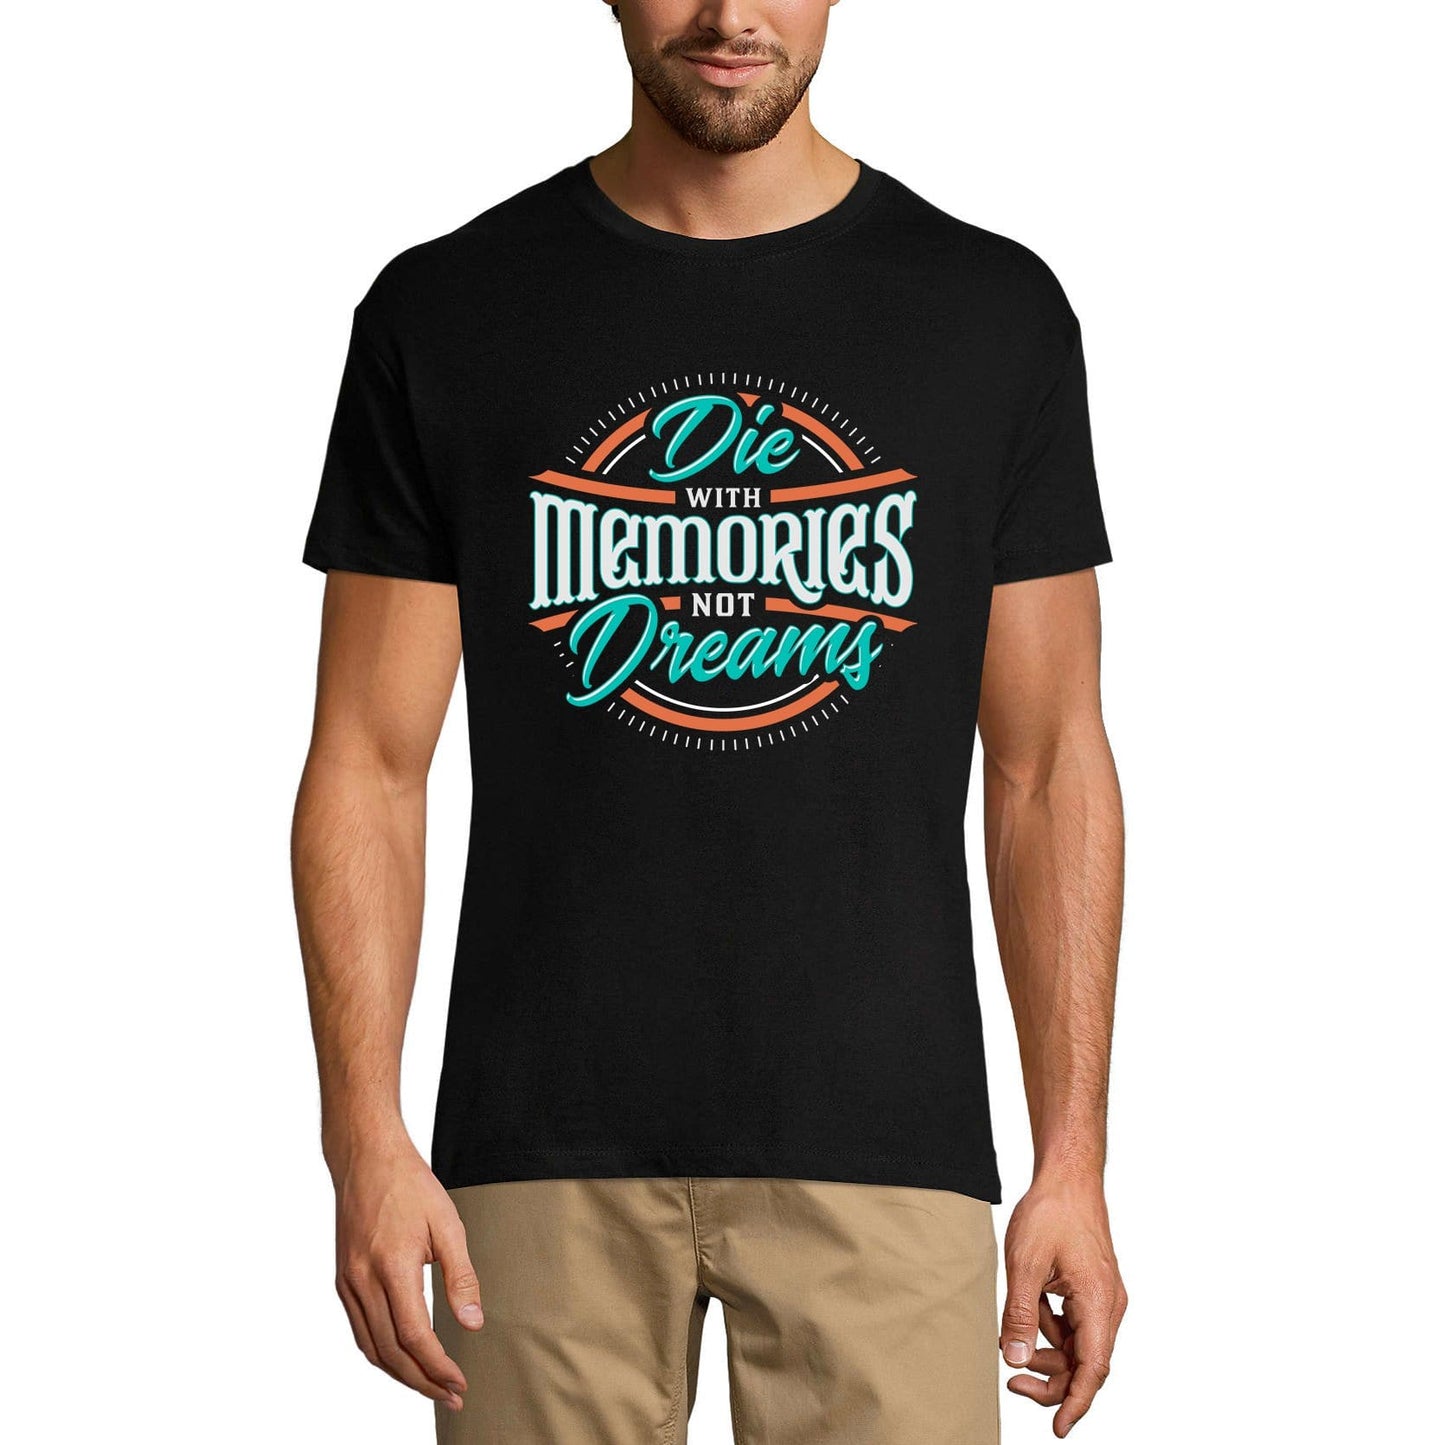 ULTRABASIC Men's T-Shirt Die With Memories, Not Dreams - Short Sleeve Tee shirt